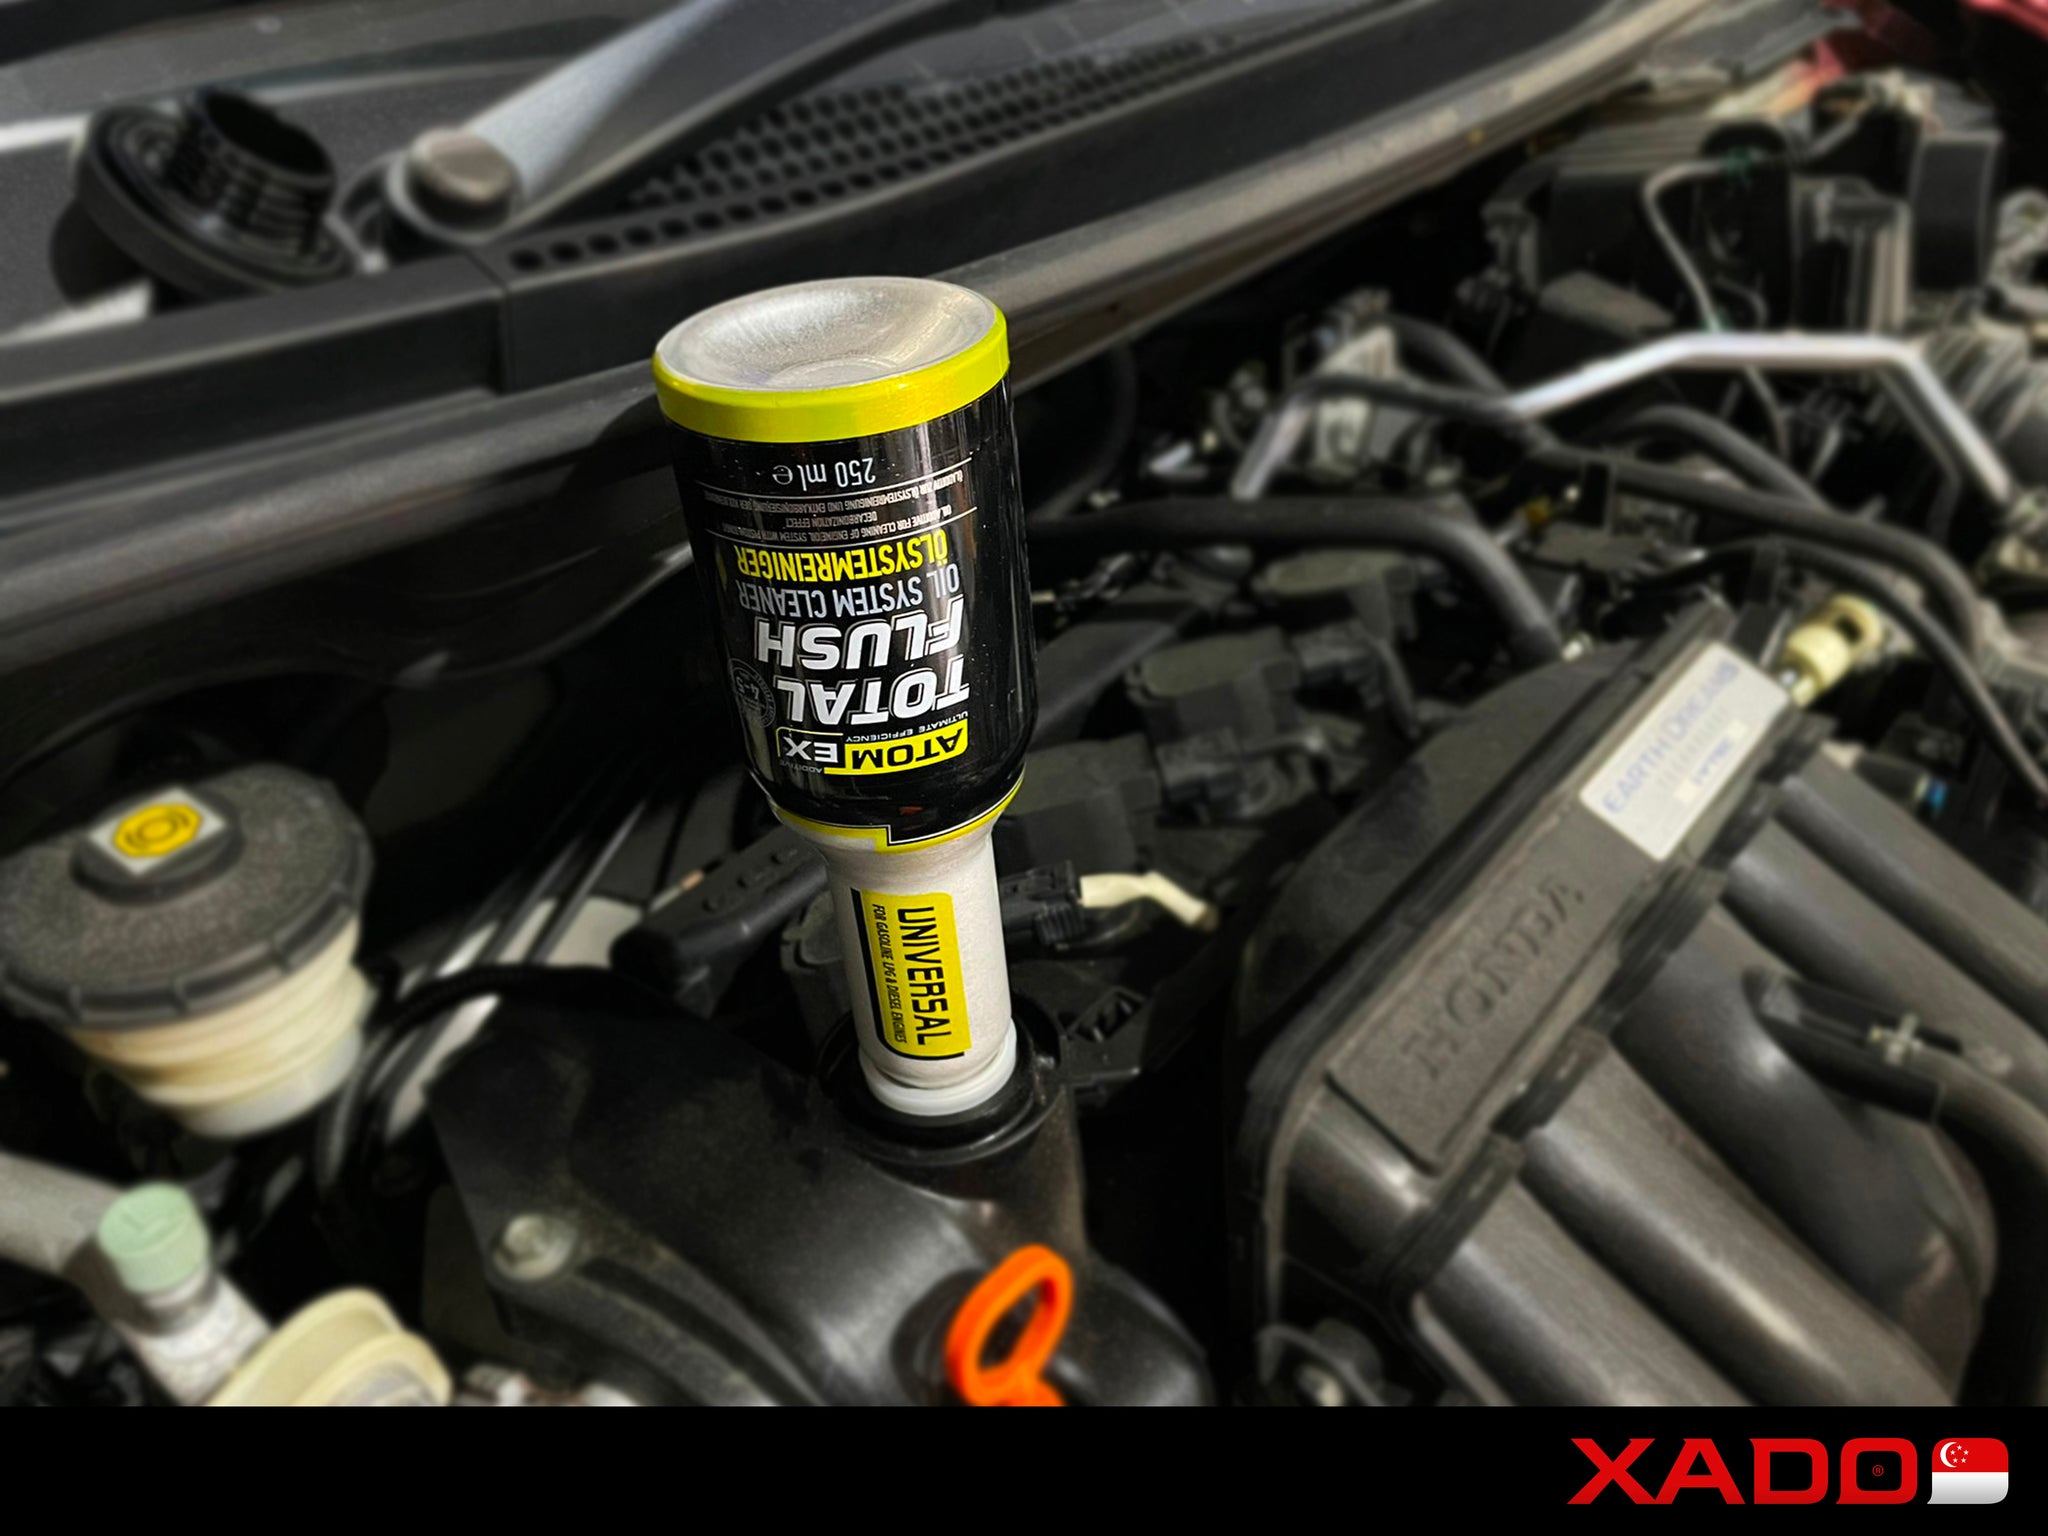  XADO ATOMEX Stop Leak Engine Oil Additive Sealer (Bottle, 250  ml) - Repair Gaskets & Seals Treatment : Automotive